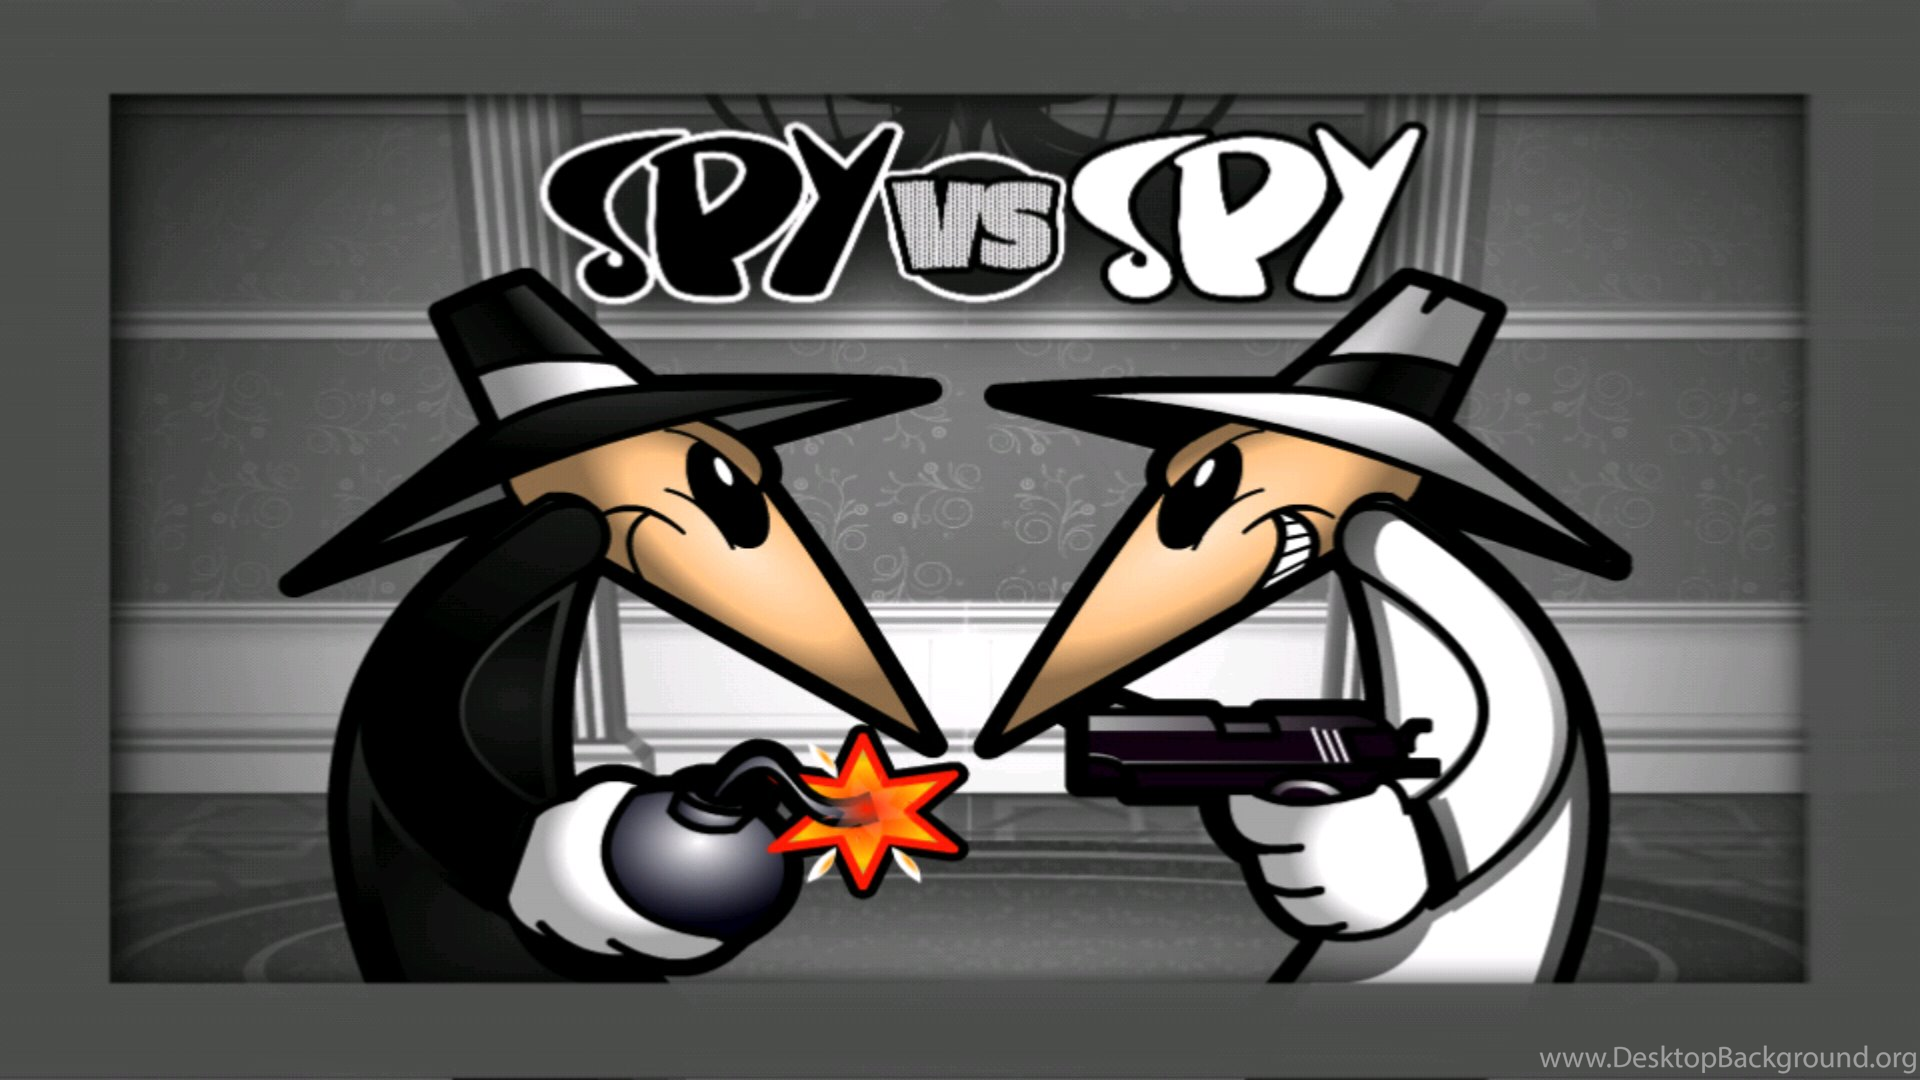 Spy Vs Spy Android Games Download Free. Spy Vs Spy Arcade. Desktop Background